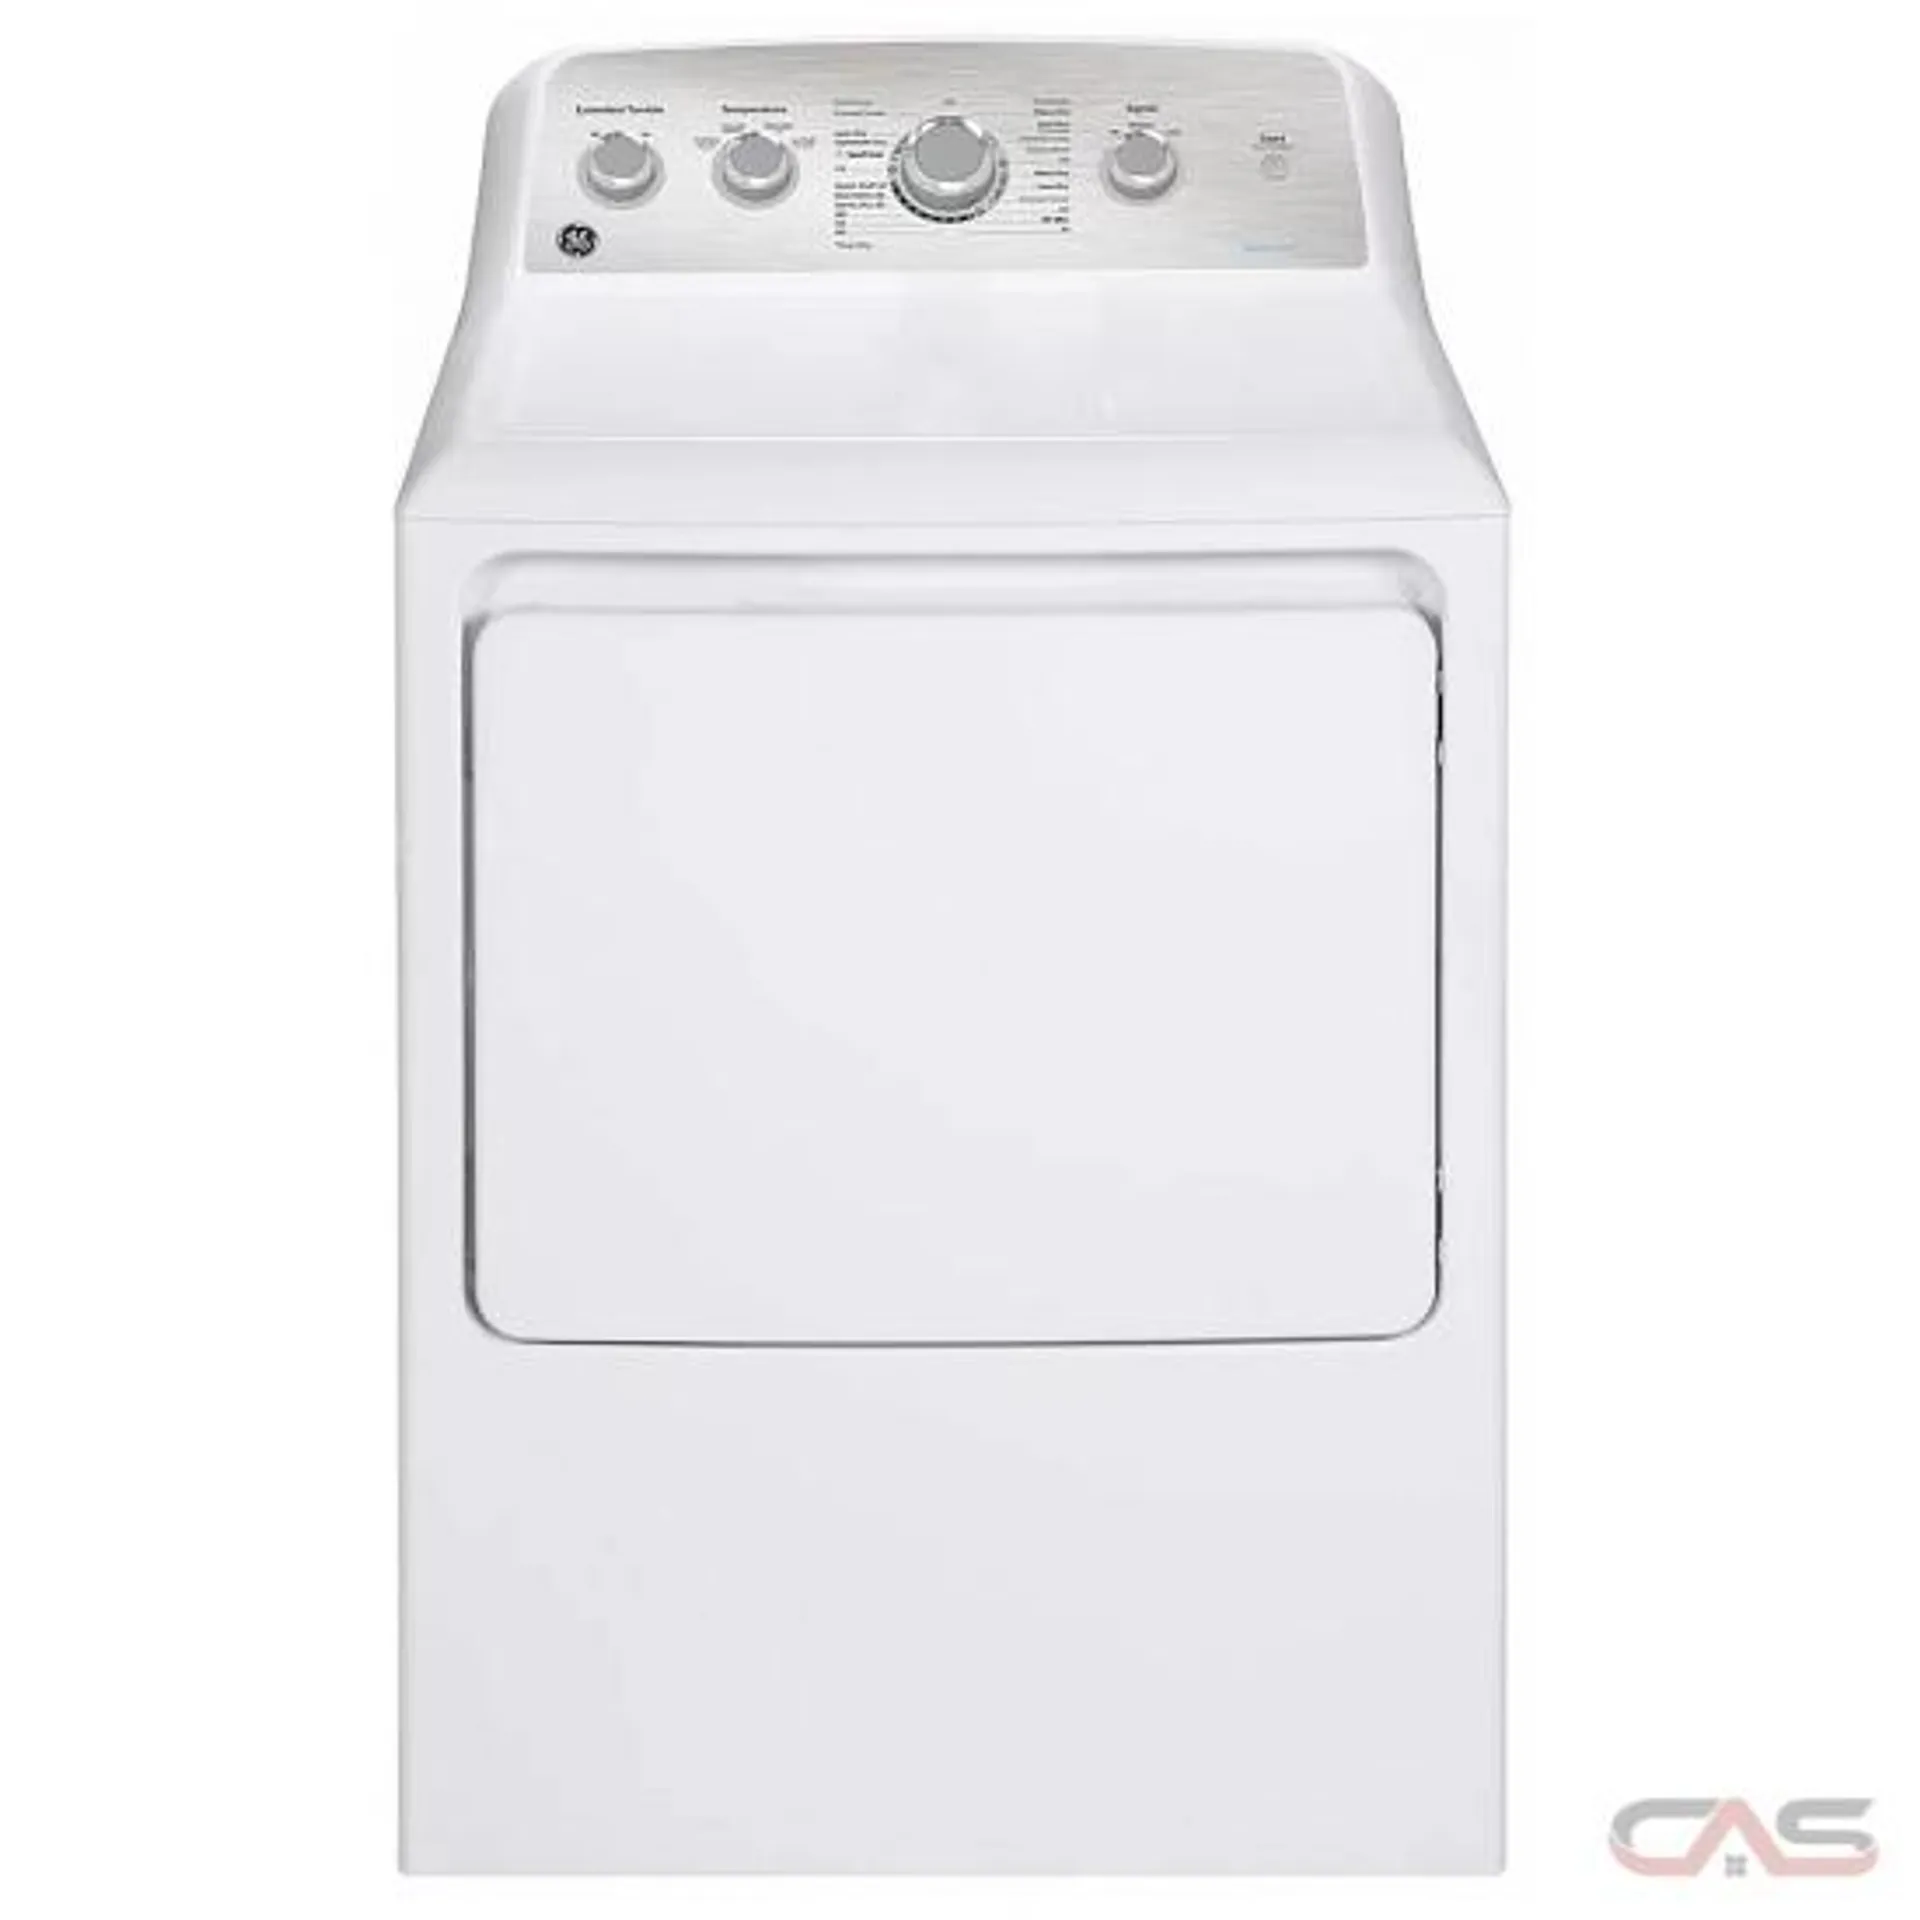 GE GTD45GBMRWS Dryer, 27" Width, Gas Dryer, 7.2 cu. ft. Capacity, 4 Temperature Settings, Steel Drum, White colour